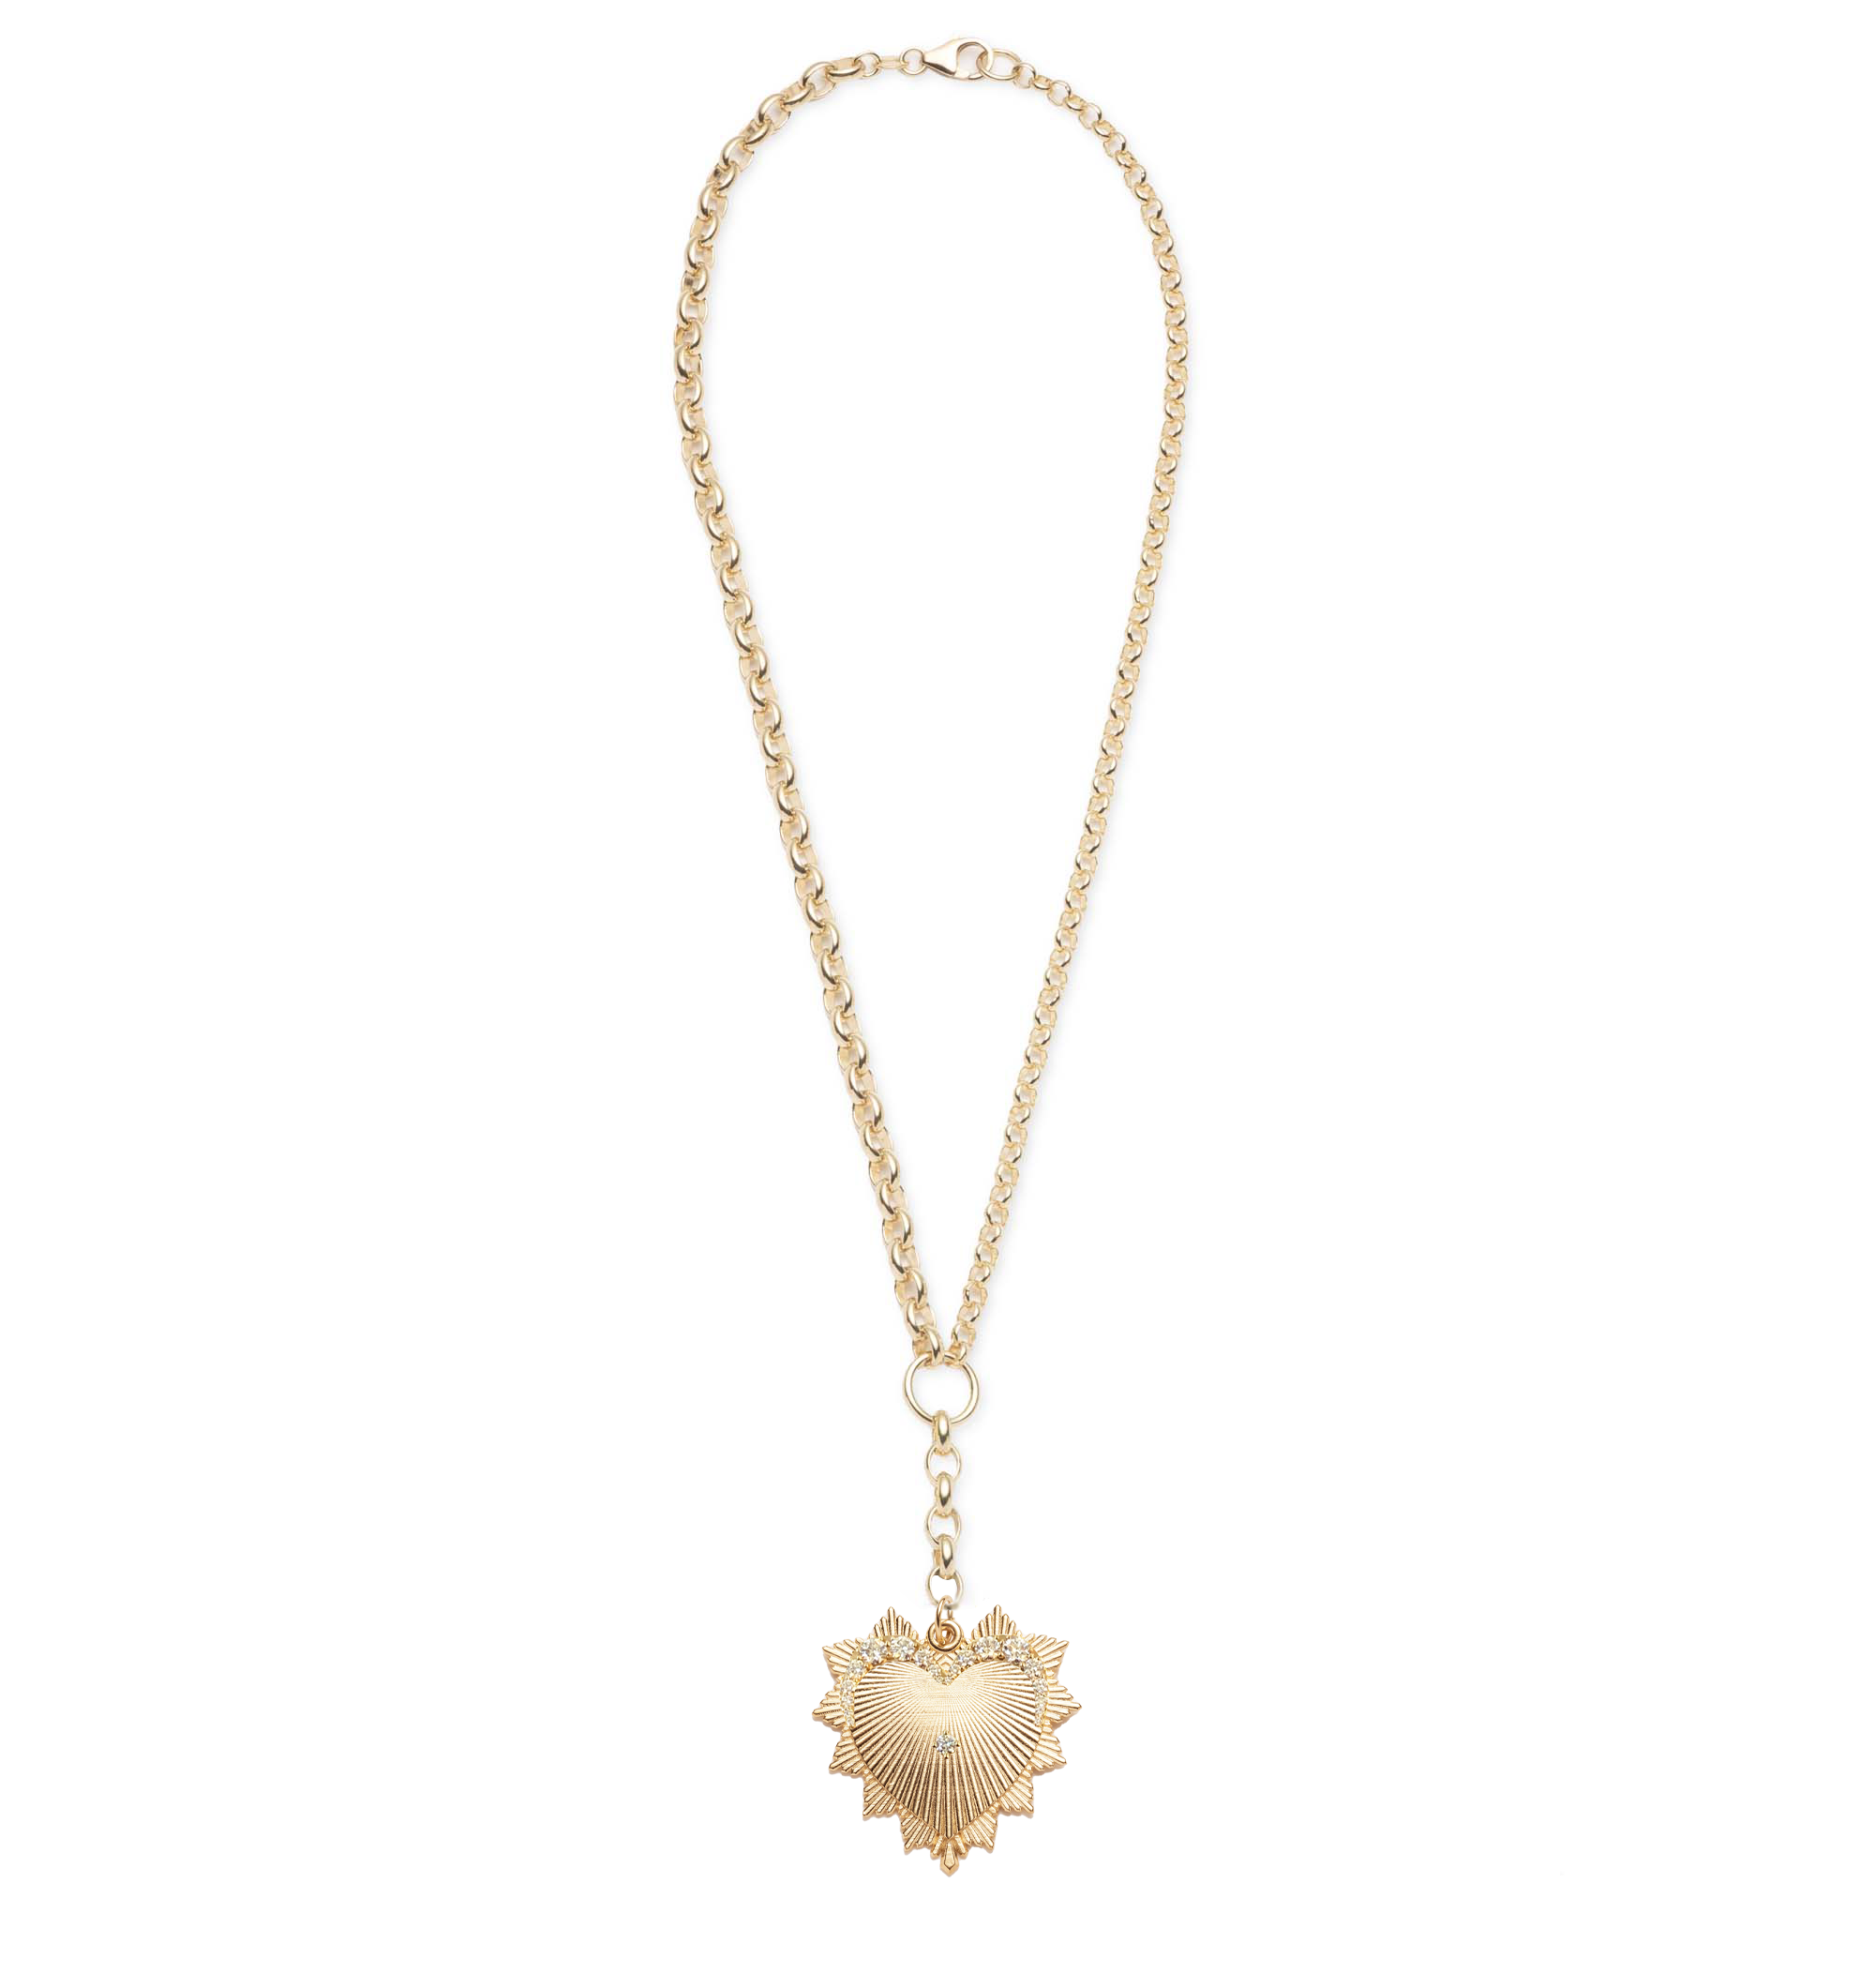 Graduated Diamond Heart Love Token - Love : Heavy Mixed Belcher Extension Chain Necklace